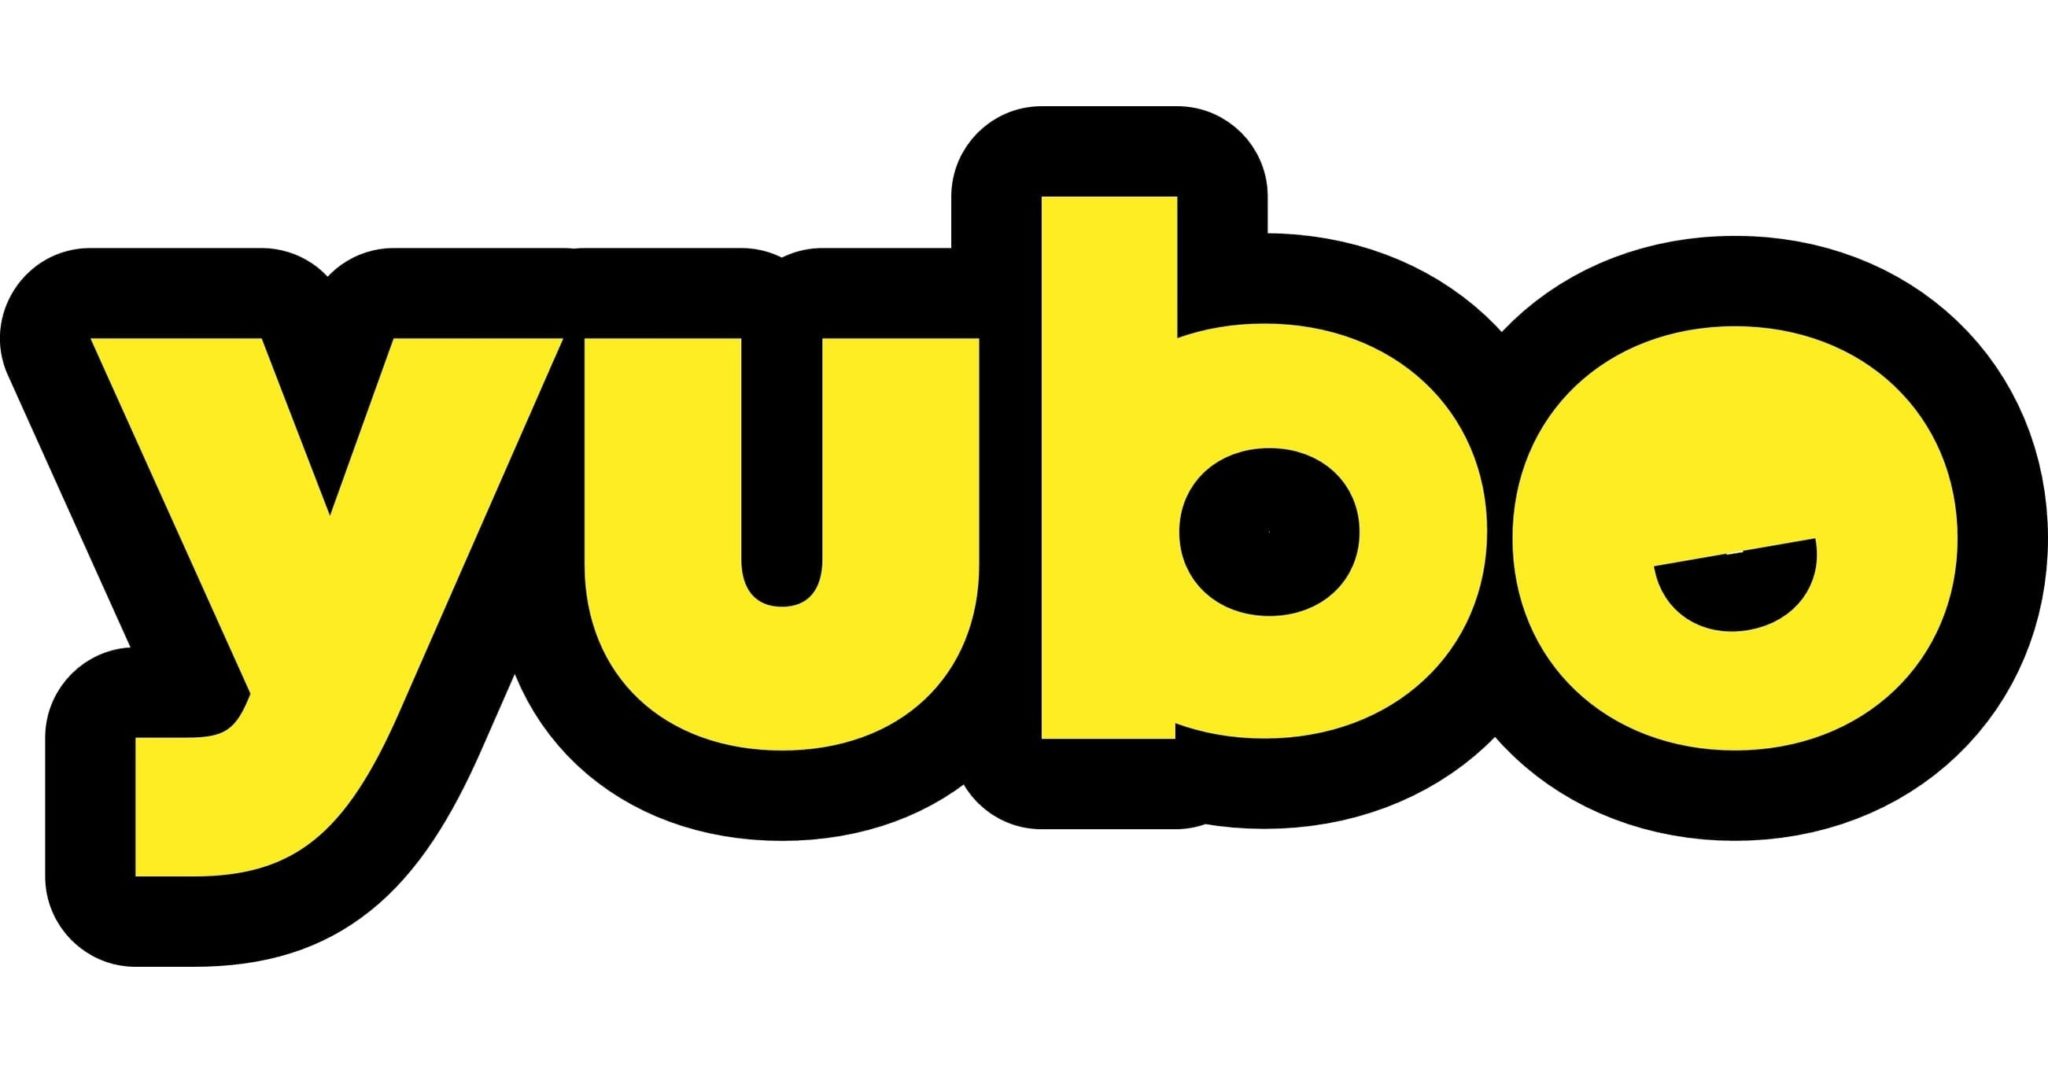 Yubo | Best Facebook Alternatives in 2021